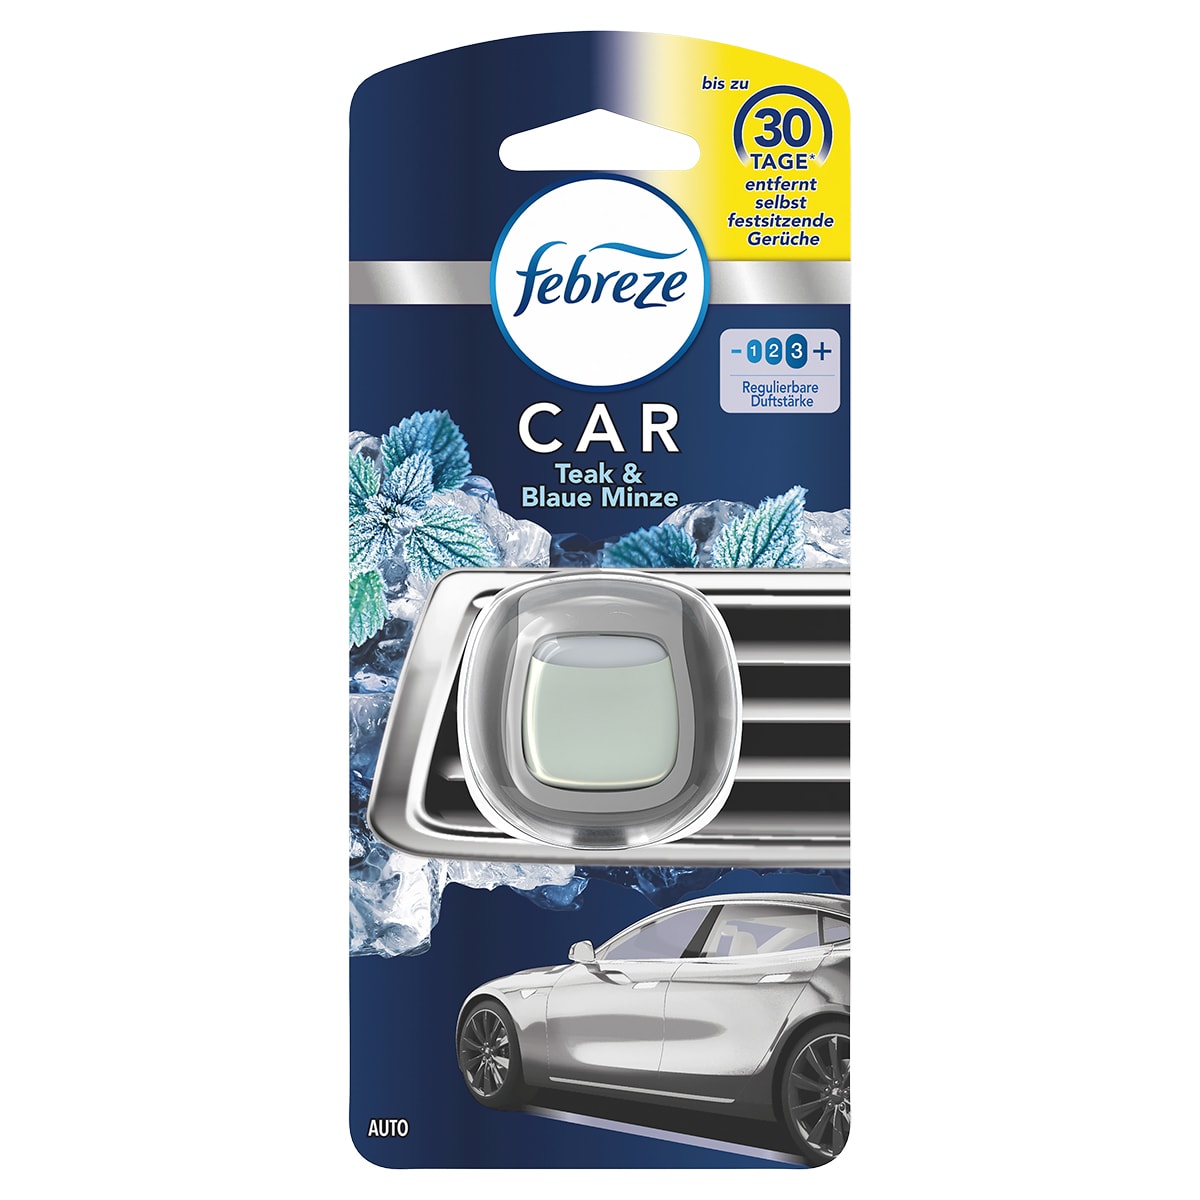 Car Diffusers – VIVE Essential Oils